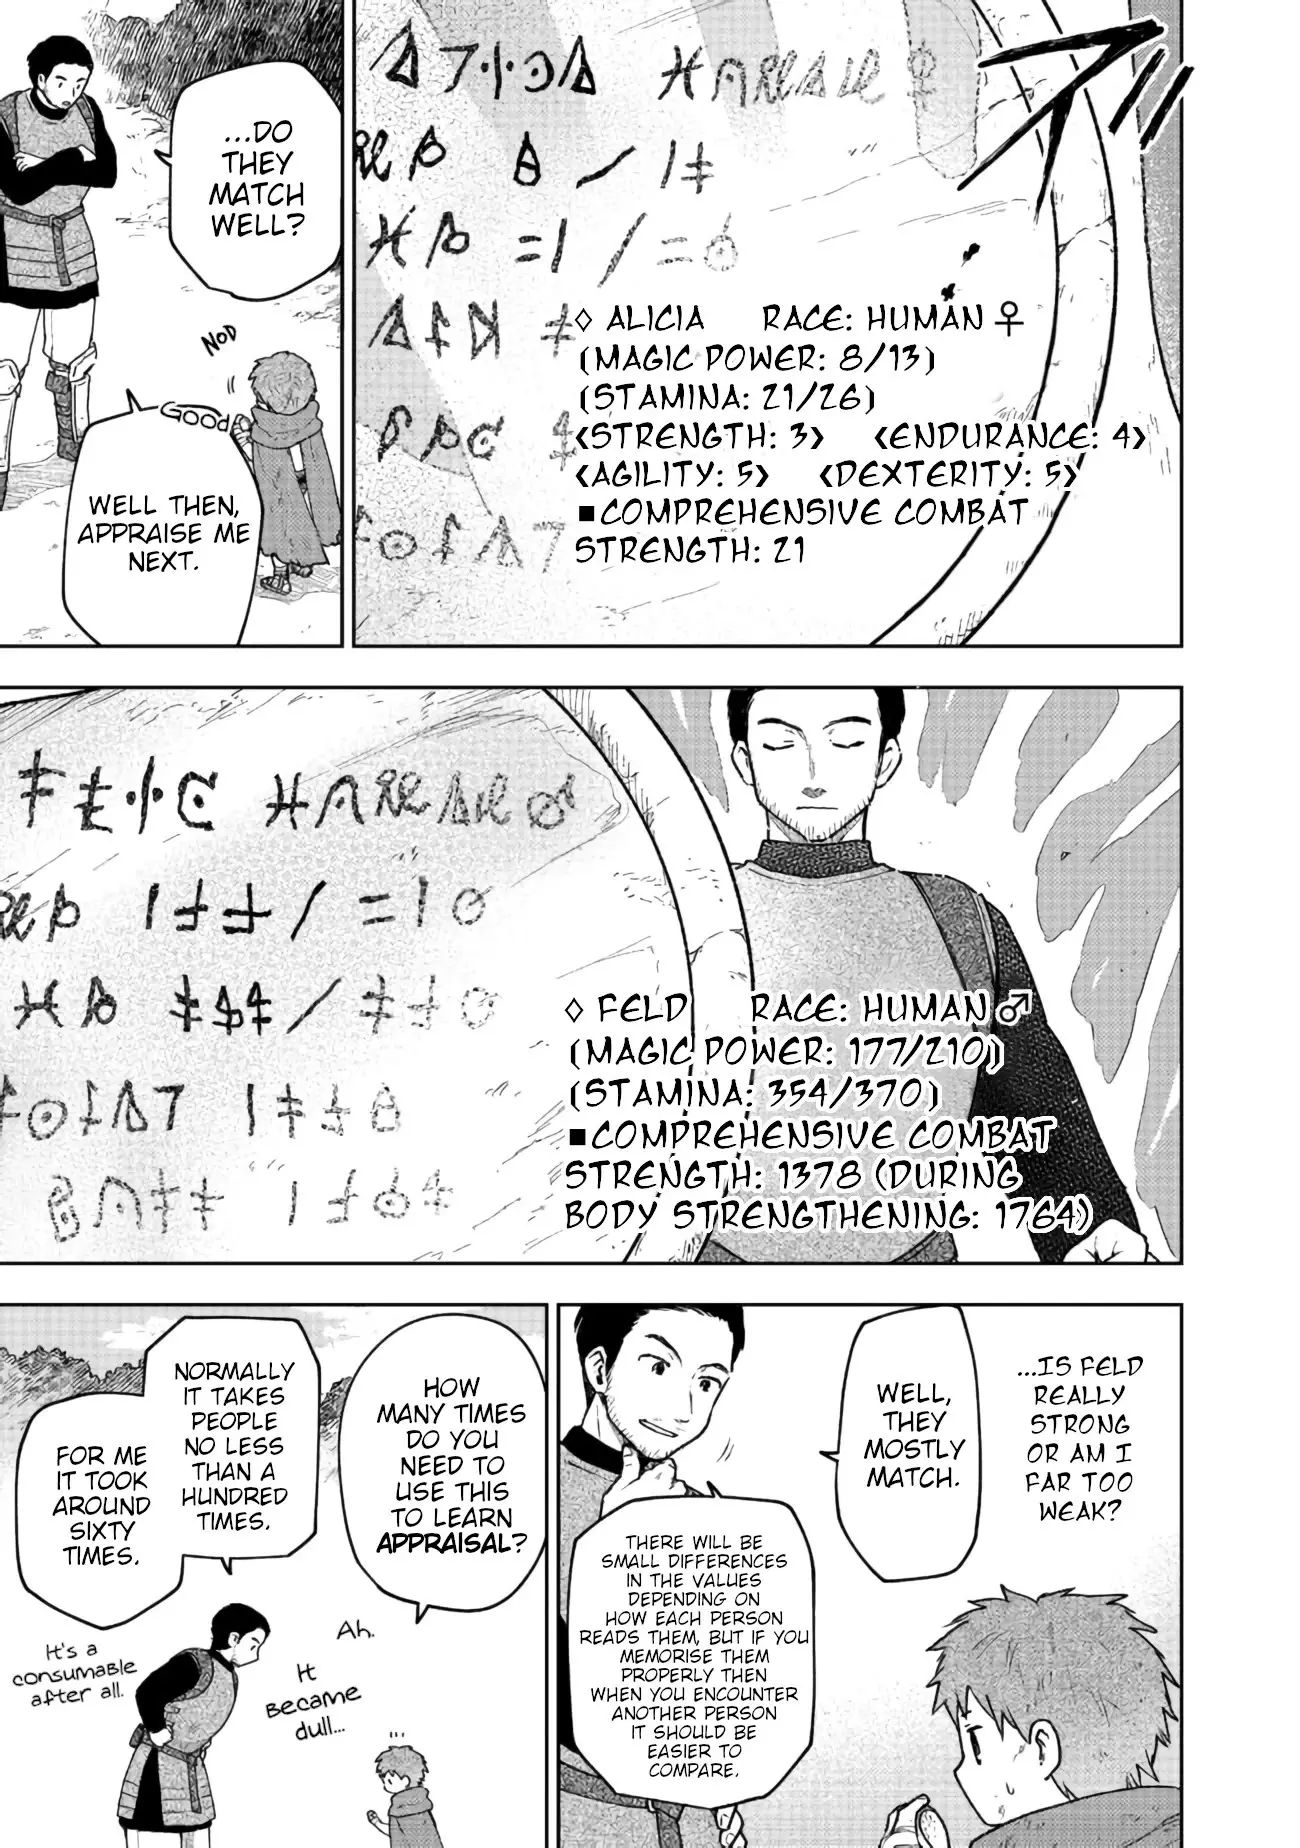 Otome Game No Heroine De Saikyou Survival - 3 page 3-897d5ebd